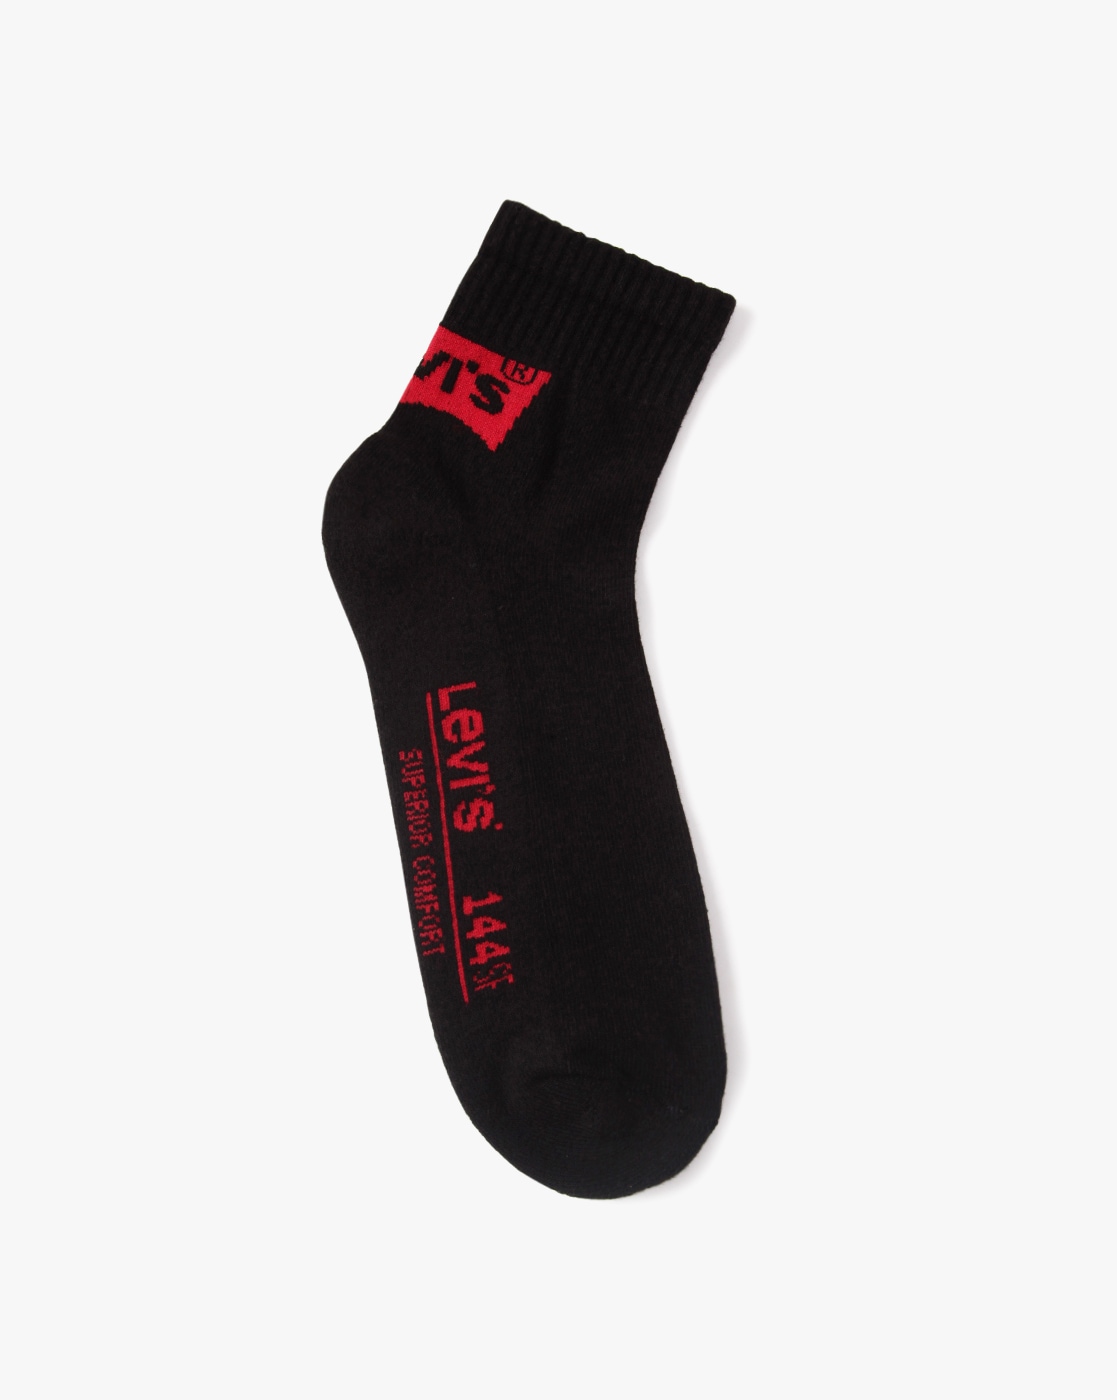 Buy Assorted Socks for Men by LEVIS Online 